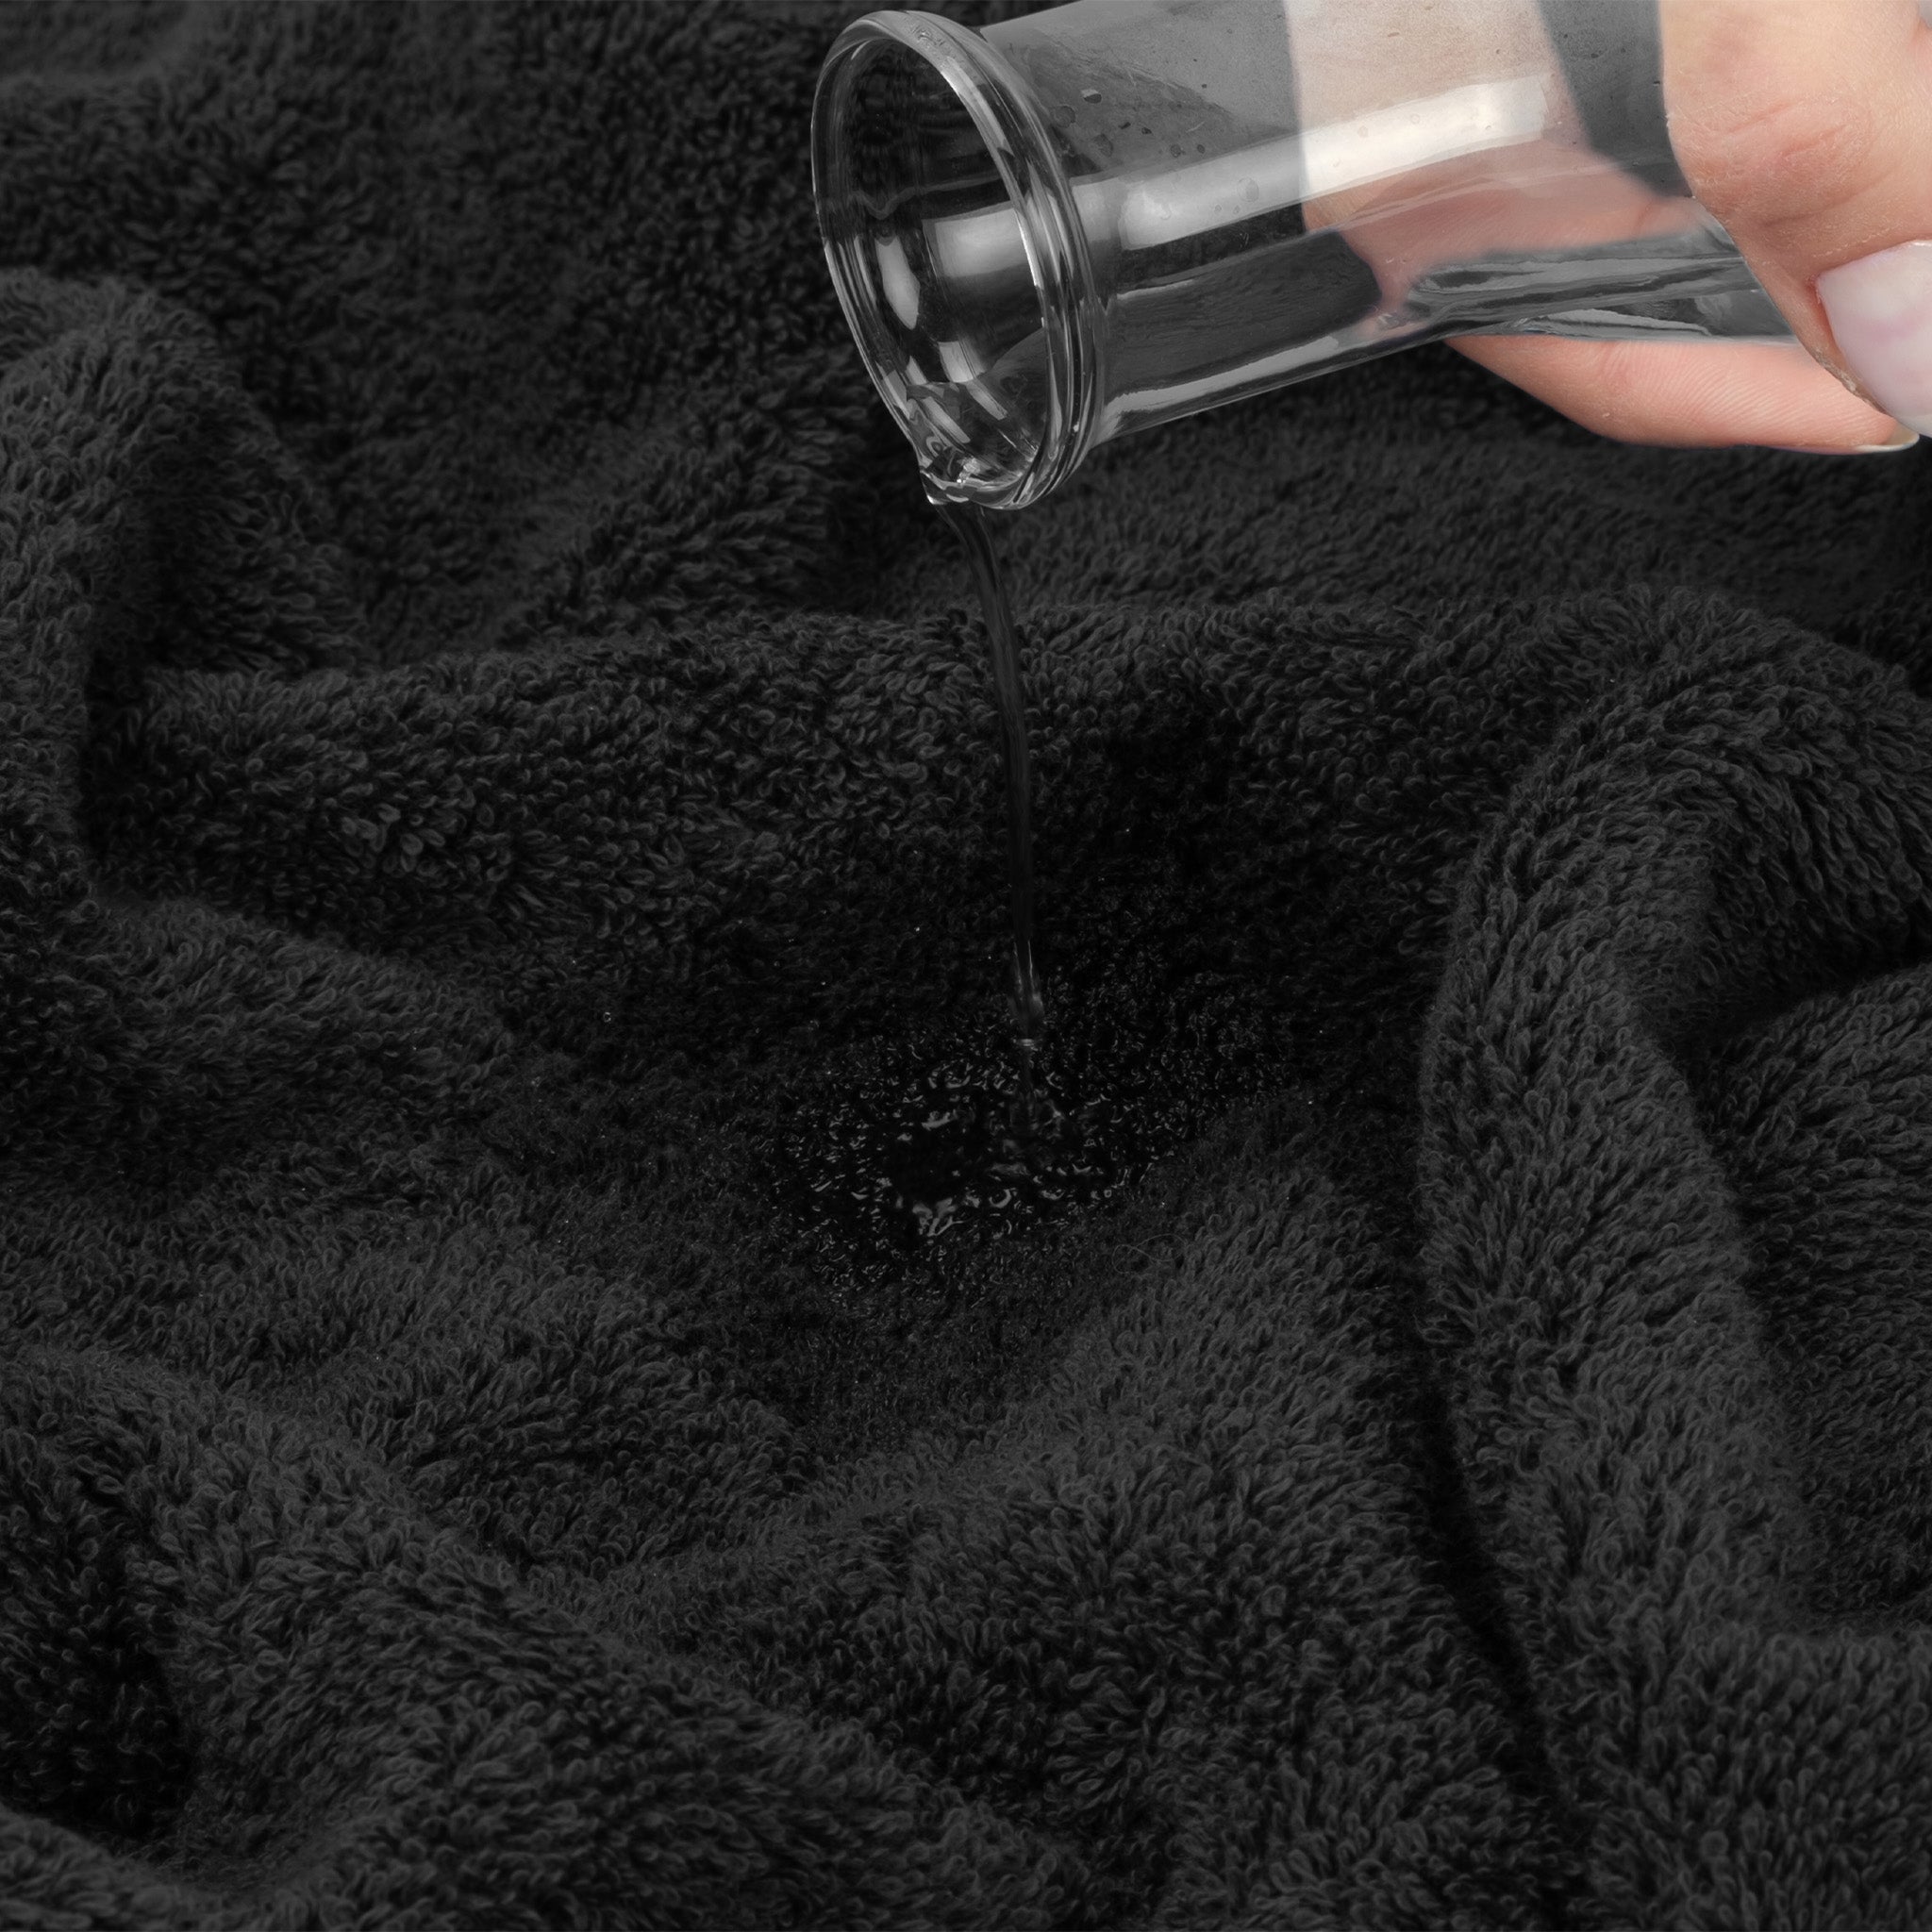  American Soft Linen 100% Turkish Cotton 4 Pack Hand Towel Set  black-6